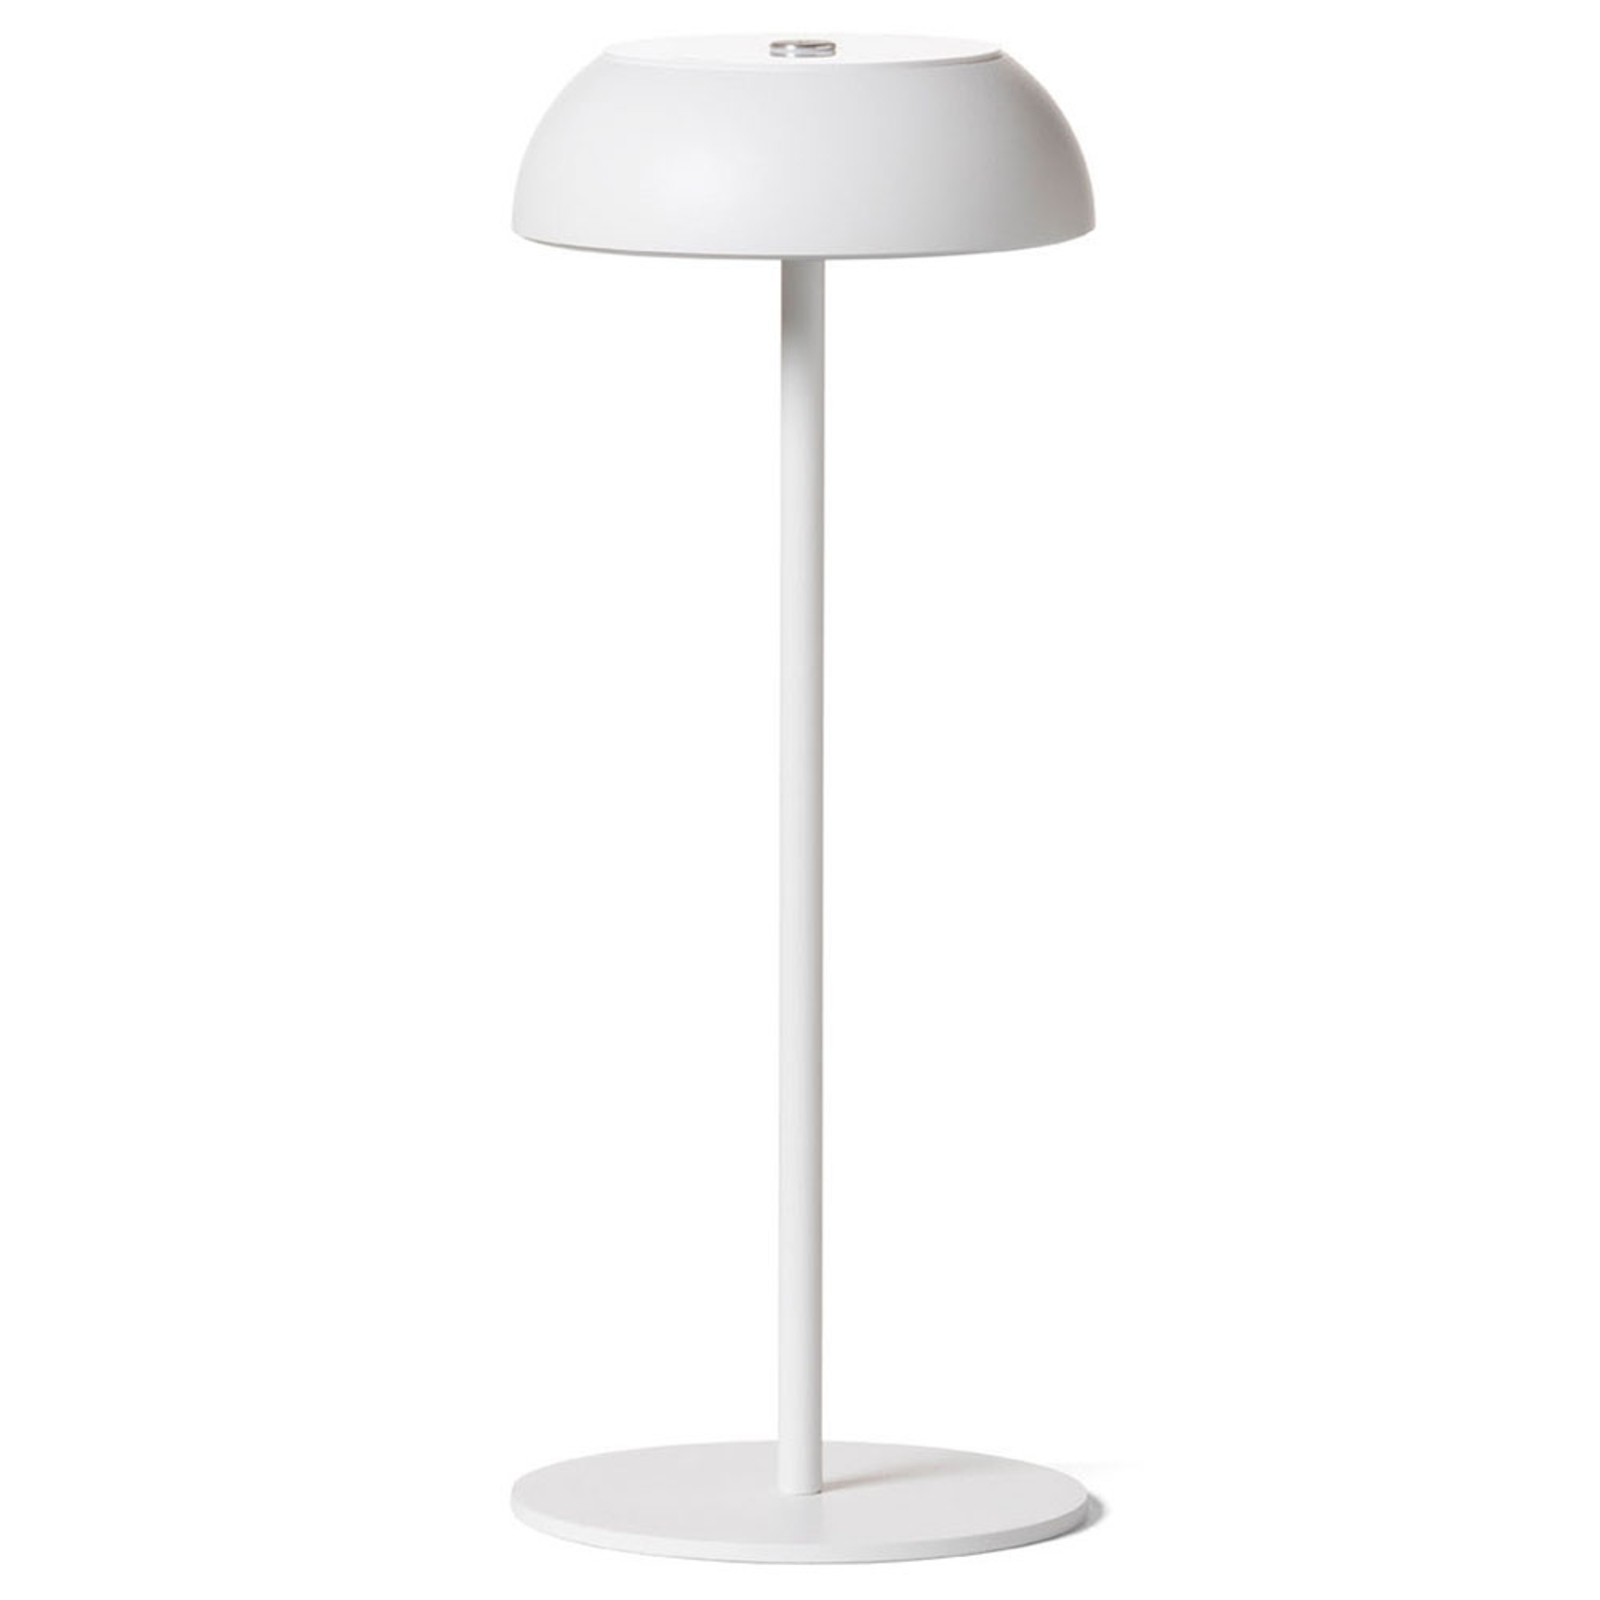 Axolight Float dizajnérska stolná LED lampa, biela